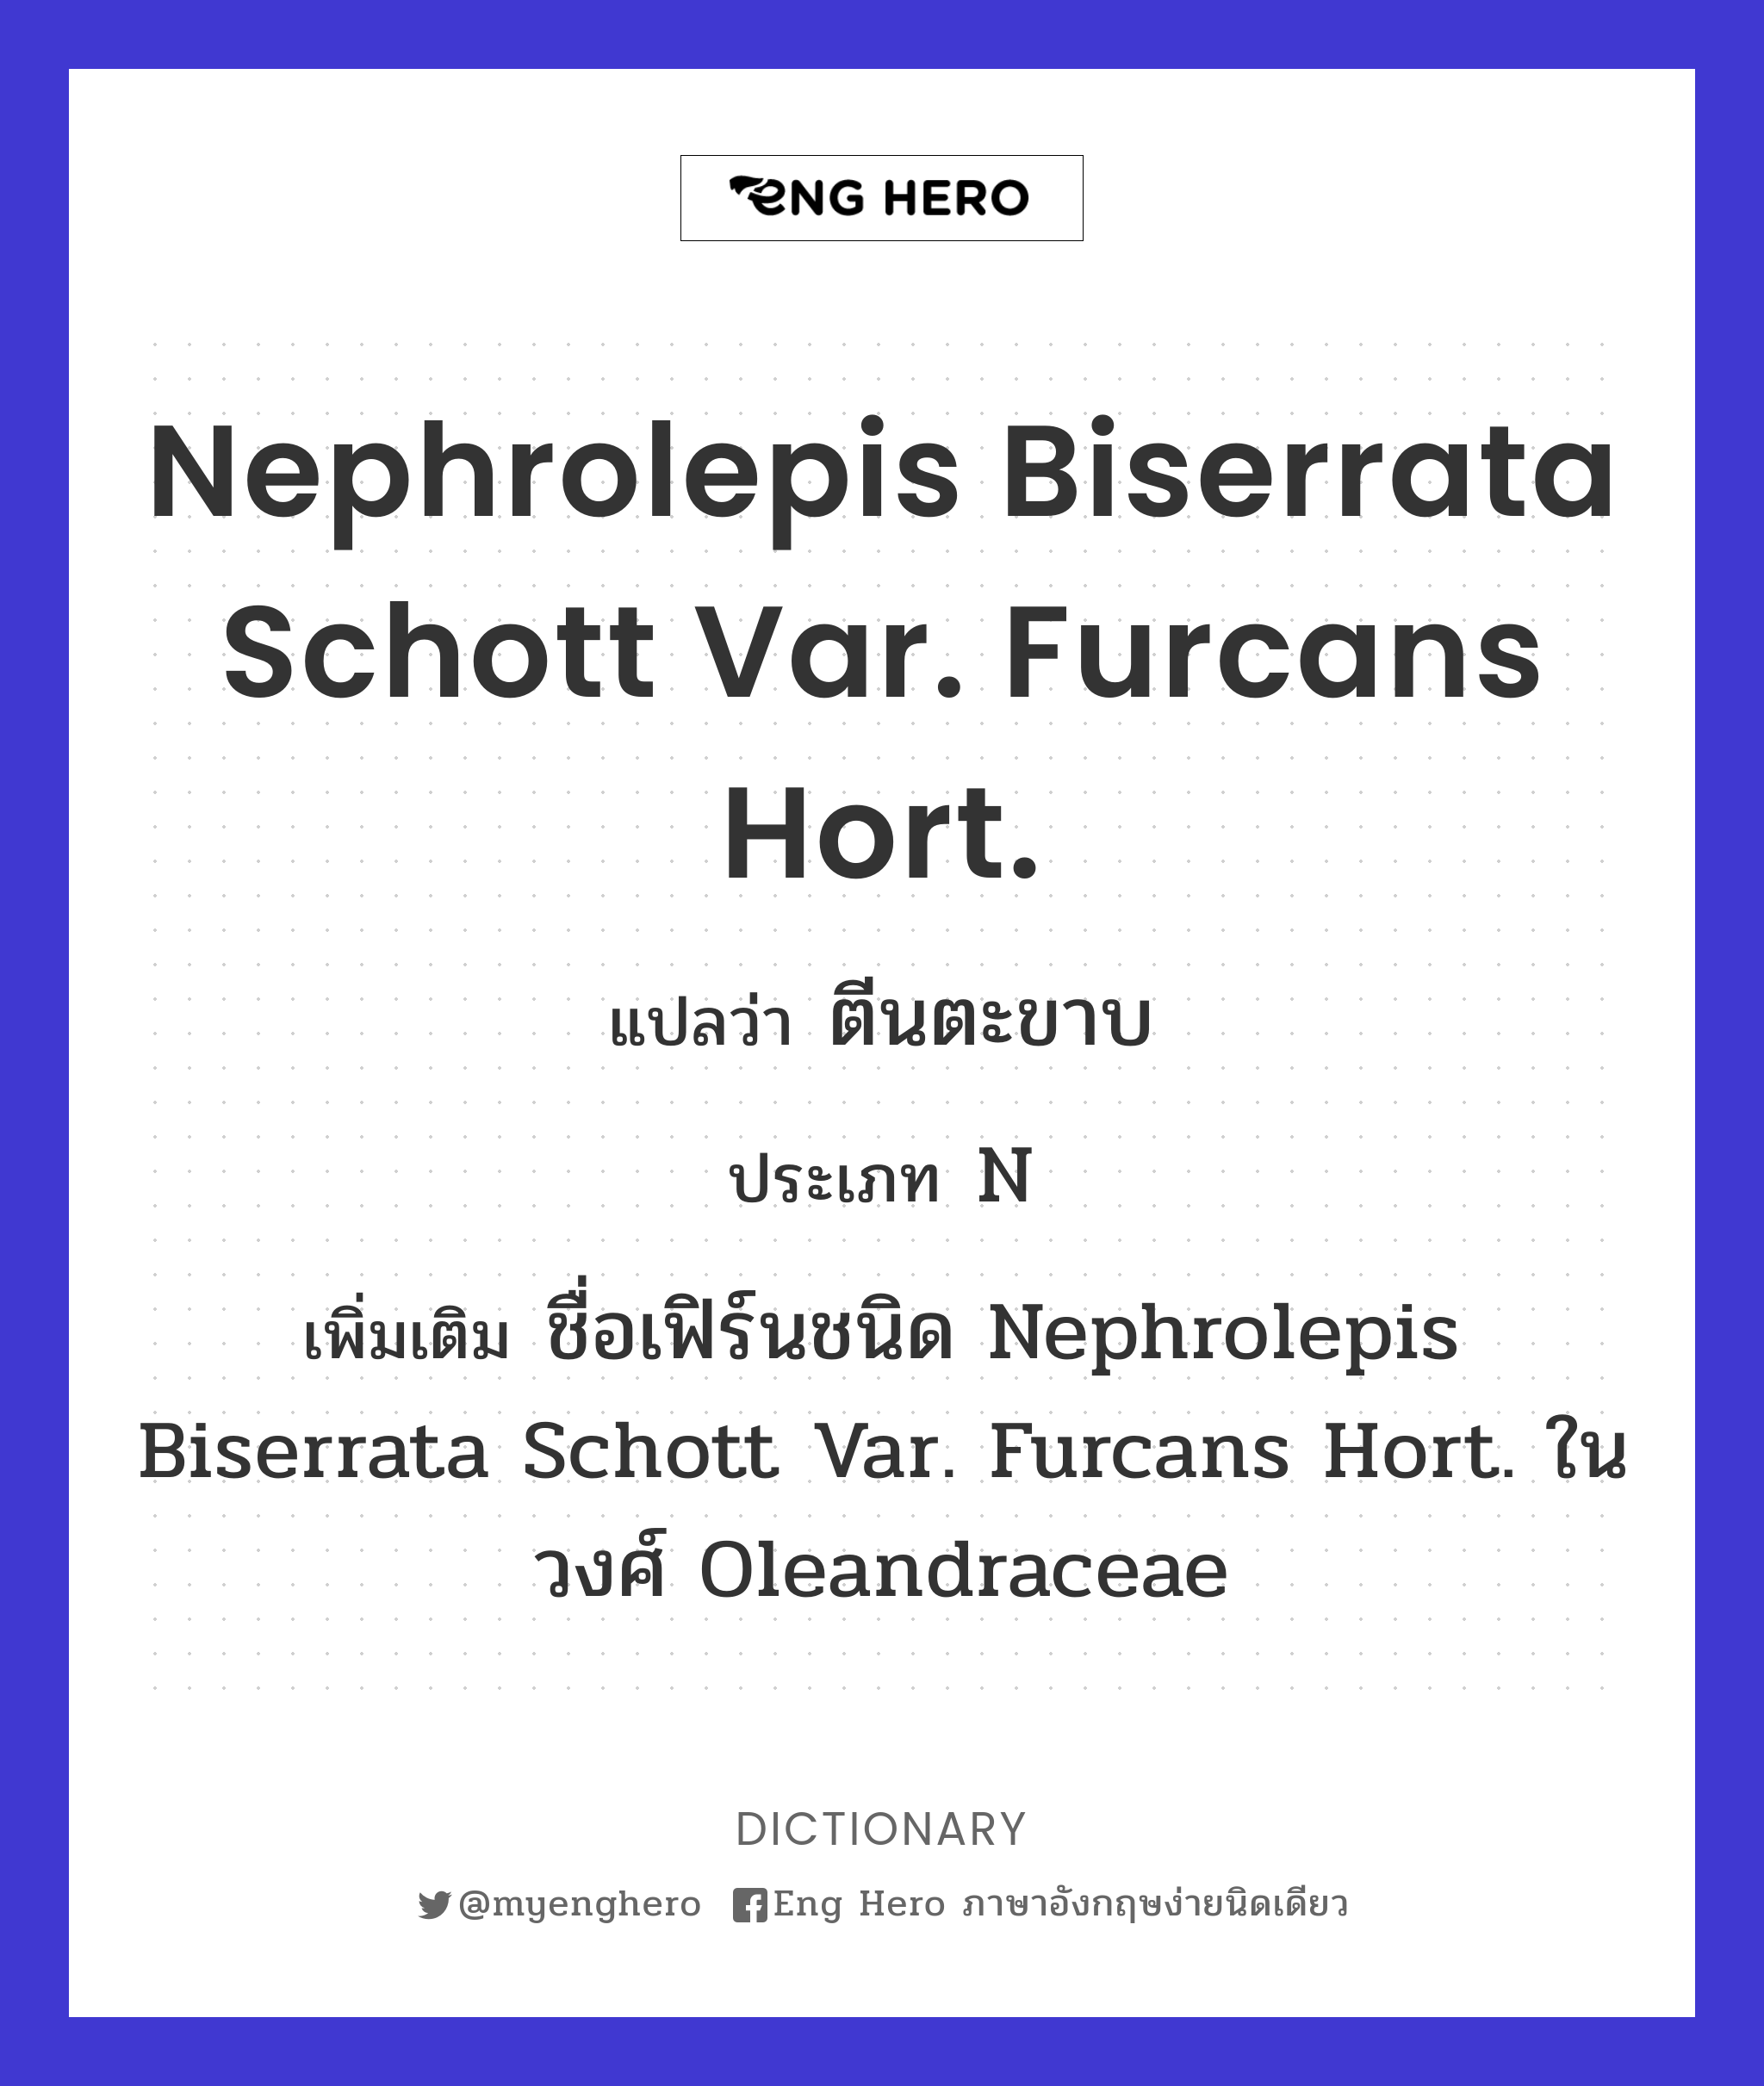 Nephrolepis biserrata Schott var. furcans Hort.